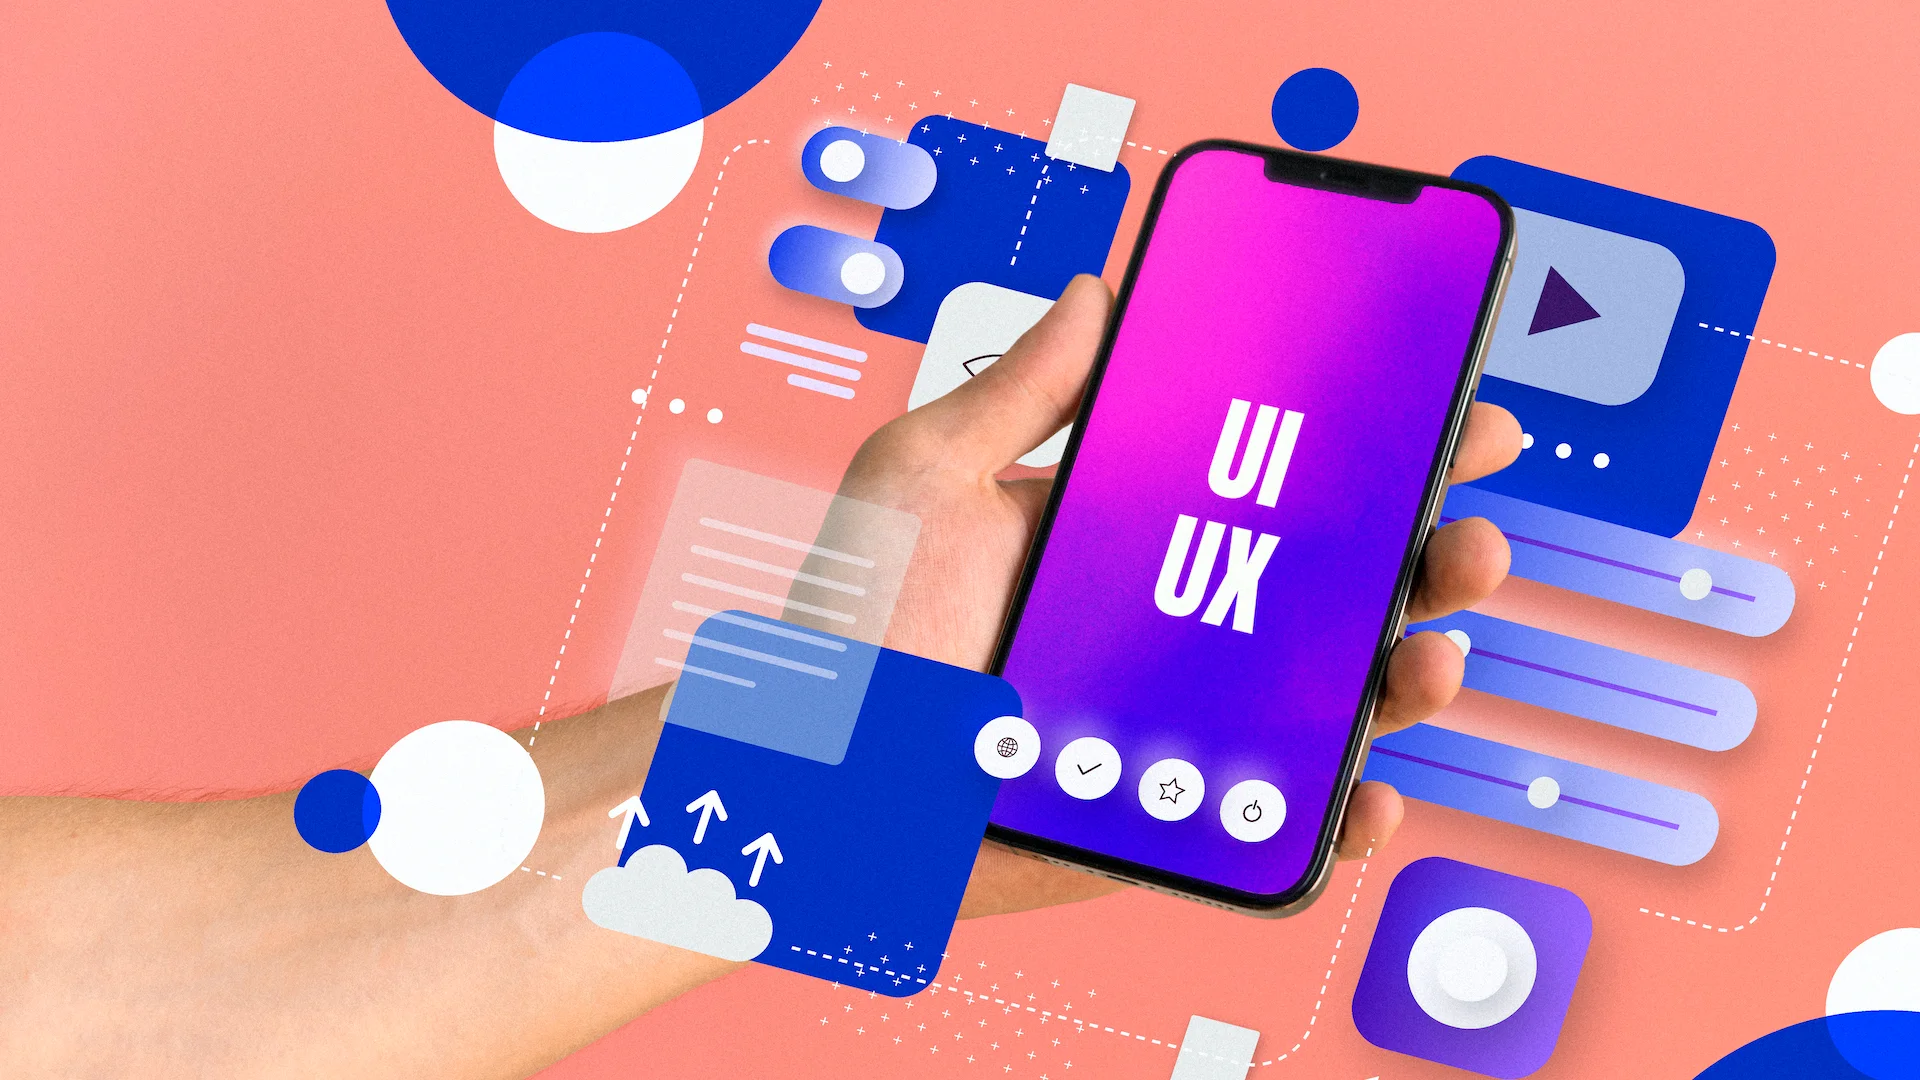 Mobile UX Design Practices